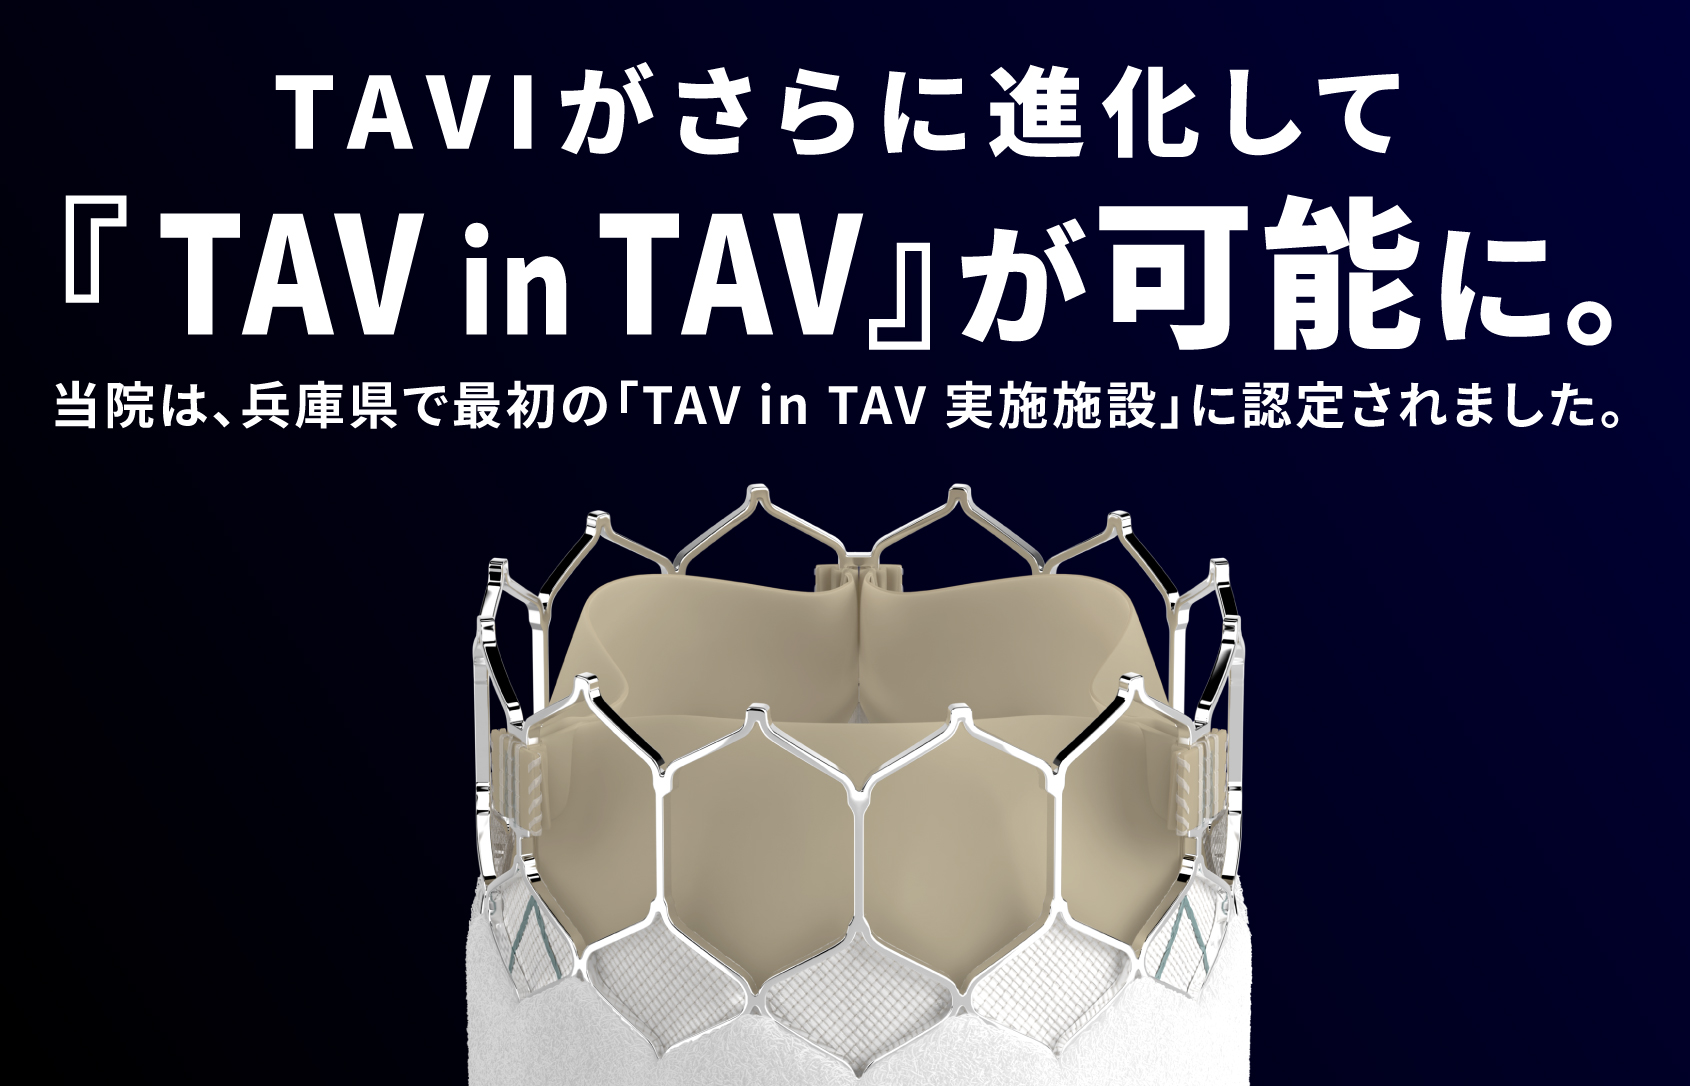 TAVIがさらに進化して『TAV in TAV』が可能に。当院は、兵庫県で最初の「TAV in TAV 実施施設」に認定されました。